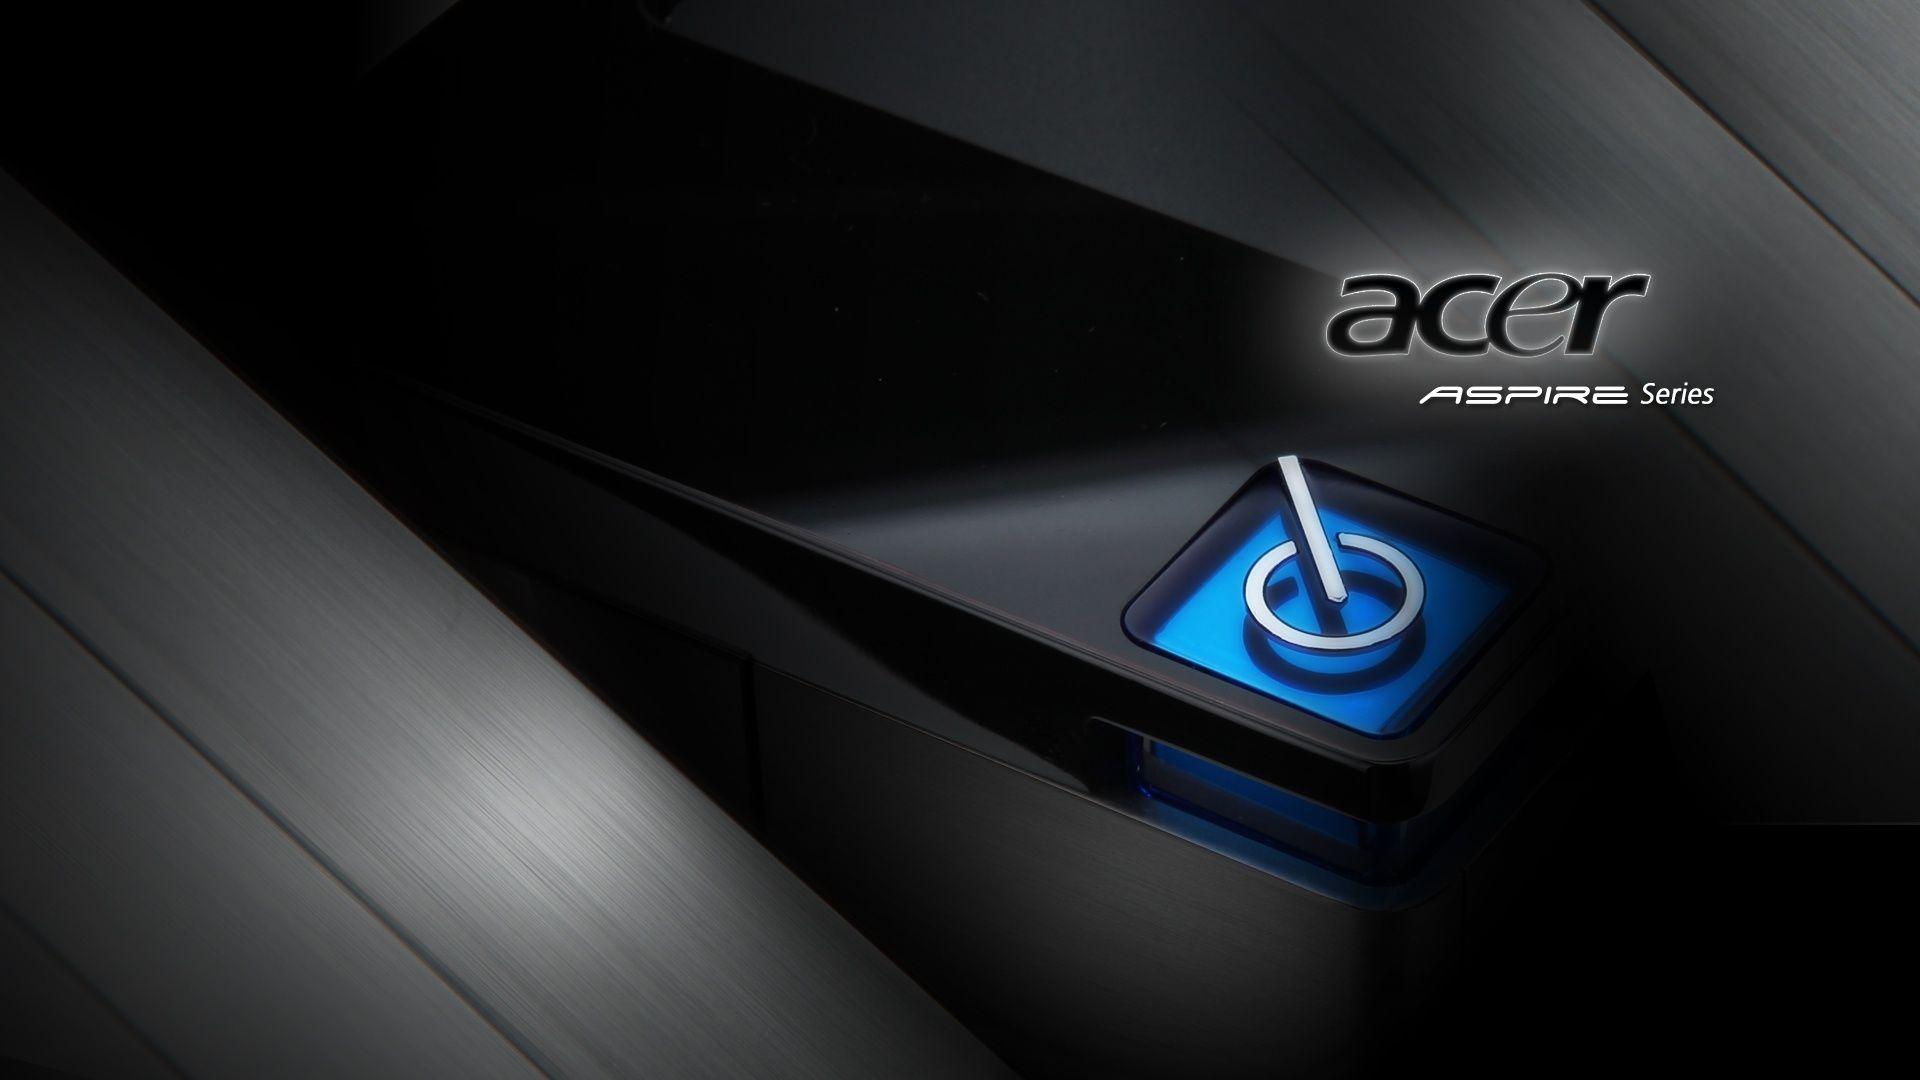 Acer Aspire Series Buble HD Desktop Wallpaper, Instagram photo